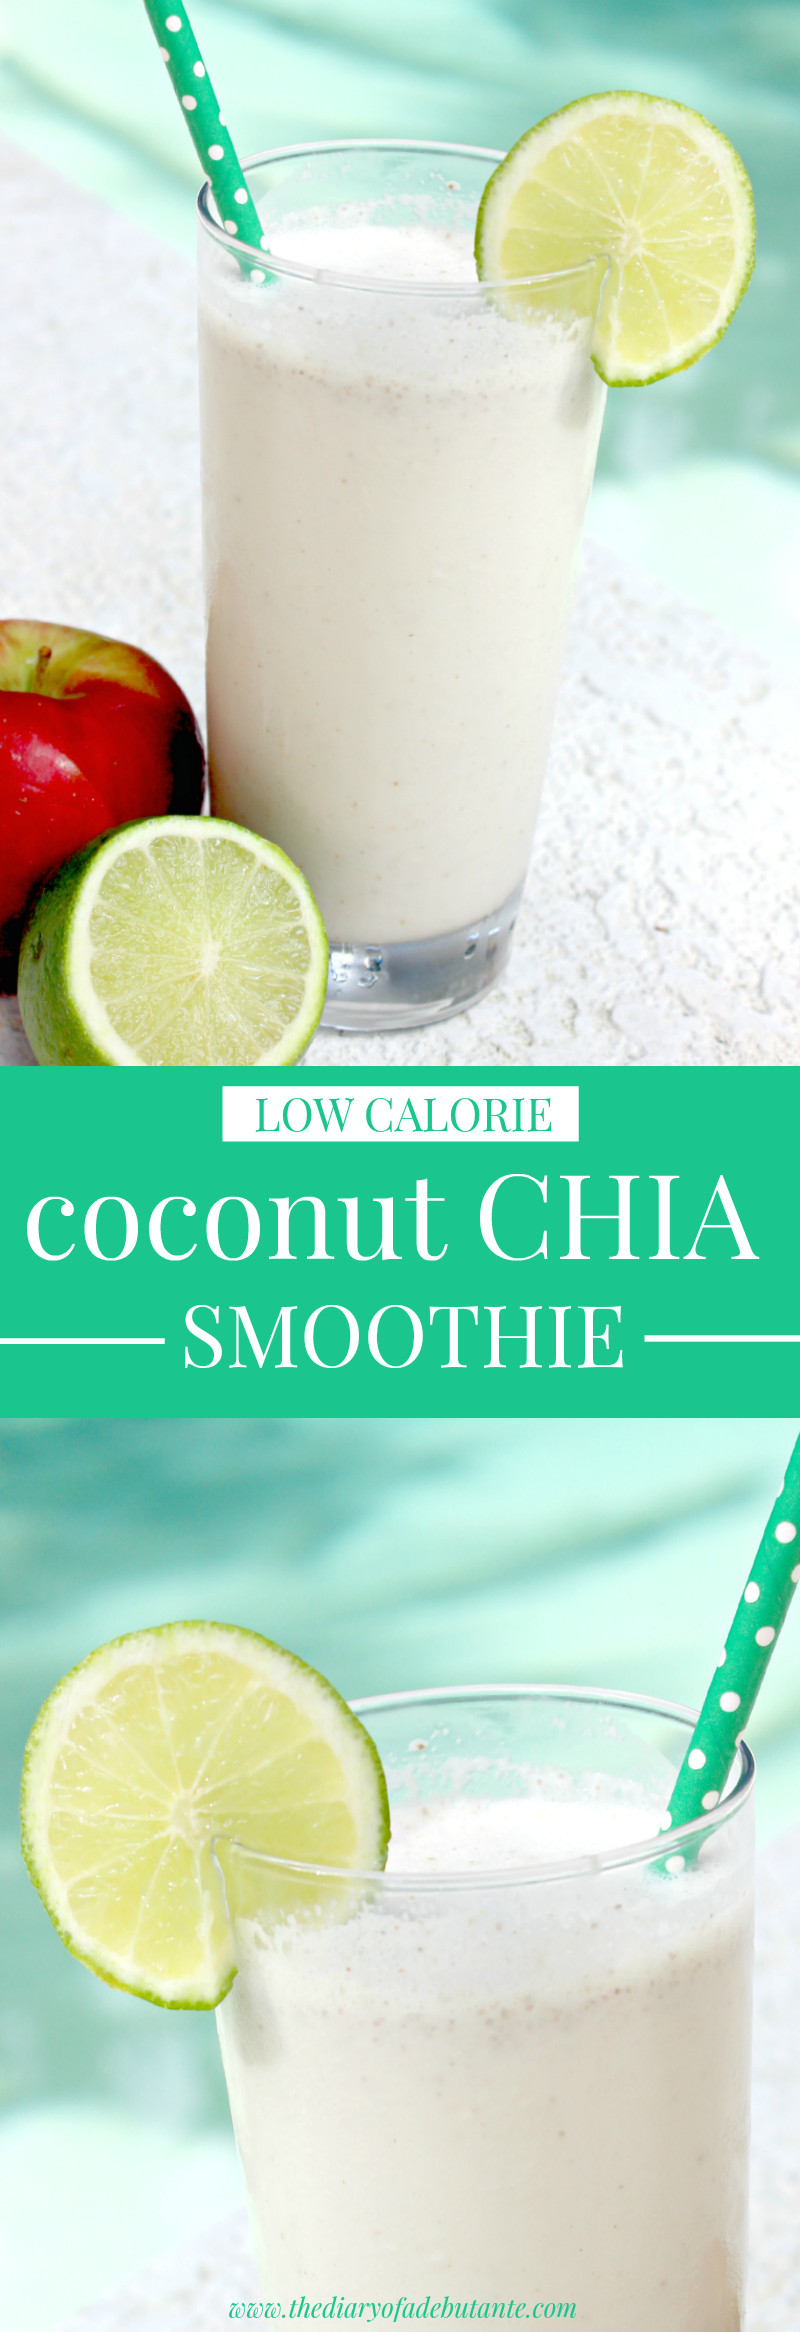 Low Calorie Smoothie Recipes
 Low Calorie Coconut Chia Smoothie Recipe